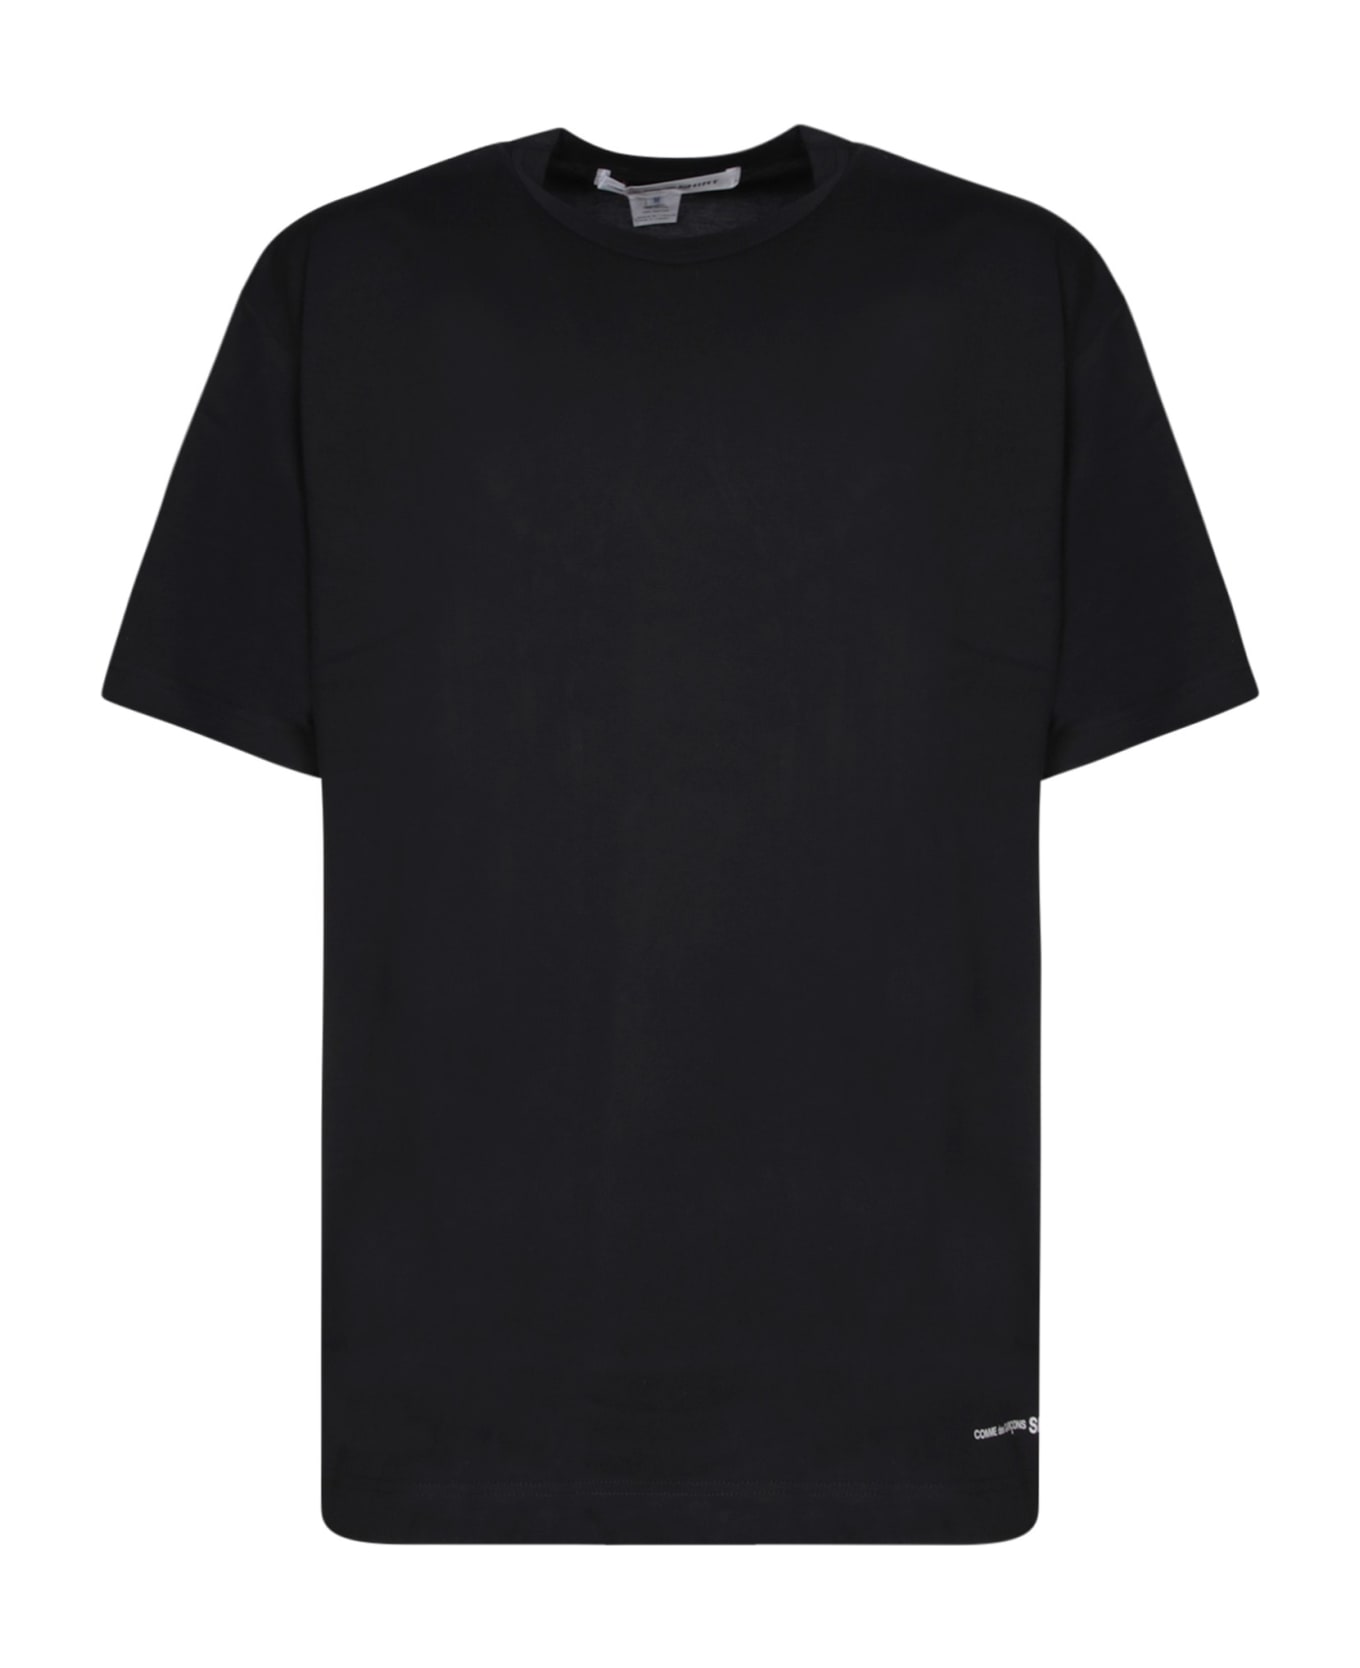 Comme des Garçons Shirt Oversize Black T-shirt - Black シャツ